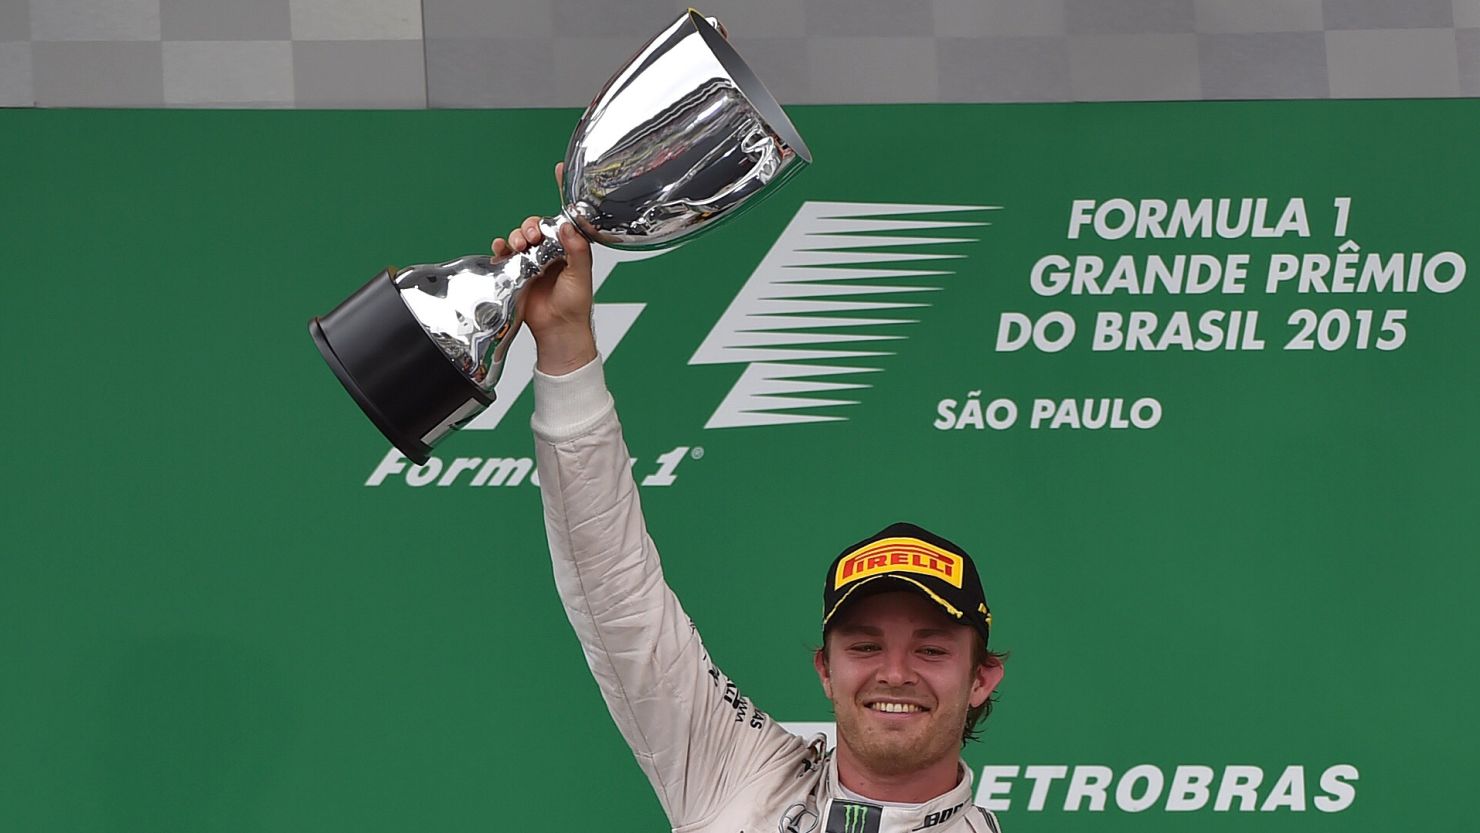 Mercedes' Formula One German driver Nico Rosberg celebrates after winning the Brazilian Grand Prix, at the Interlagos racetrack in Sao Paulo, on November 15, 2015.